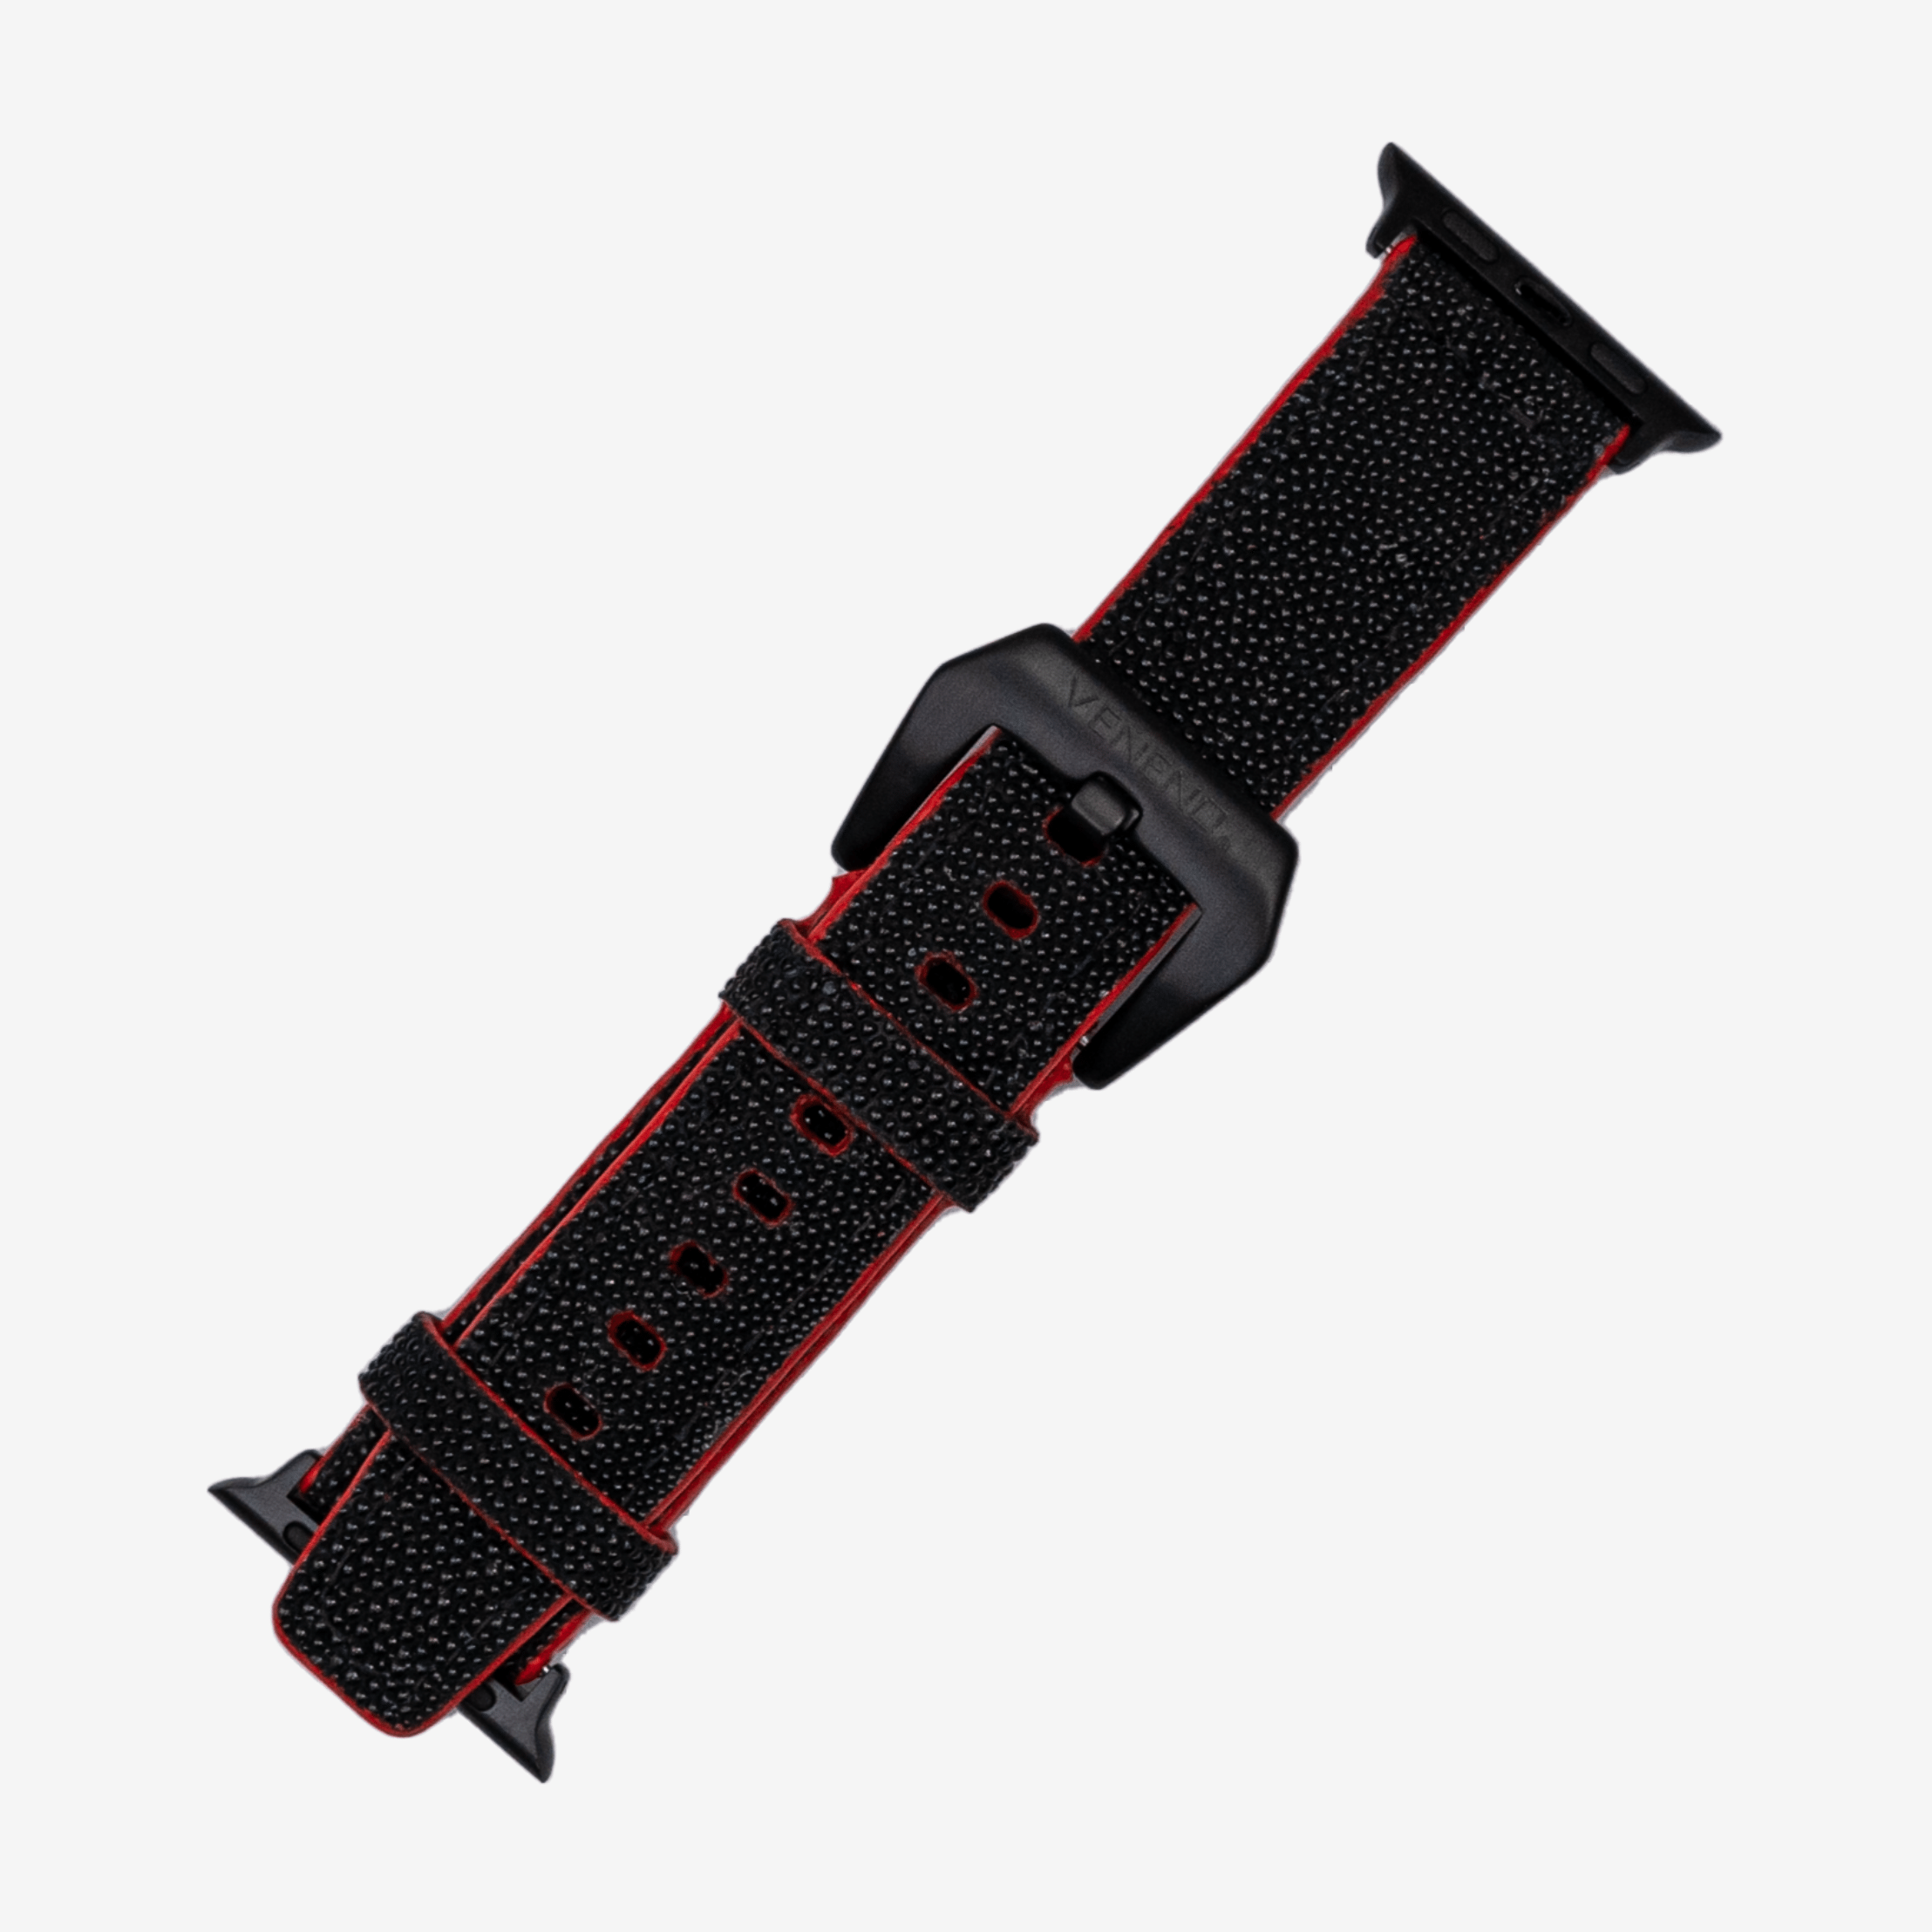 Veneno “Strap Apple Watch Ultra” Black- Red